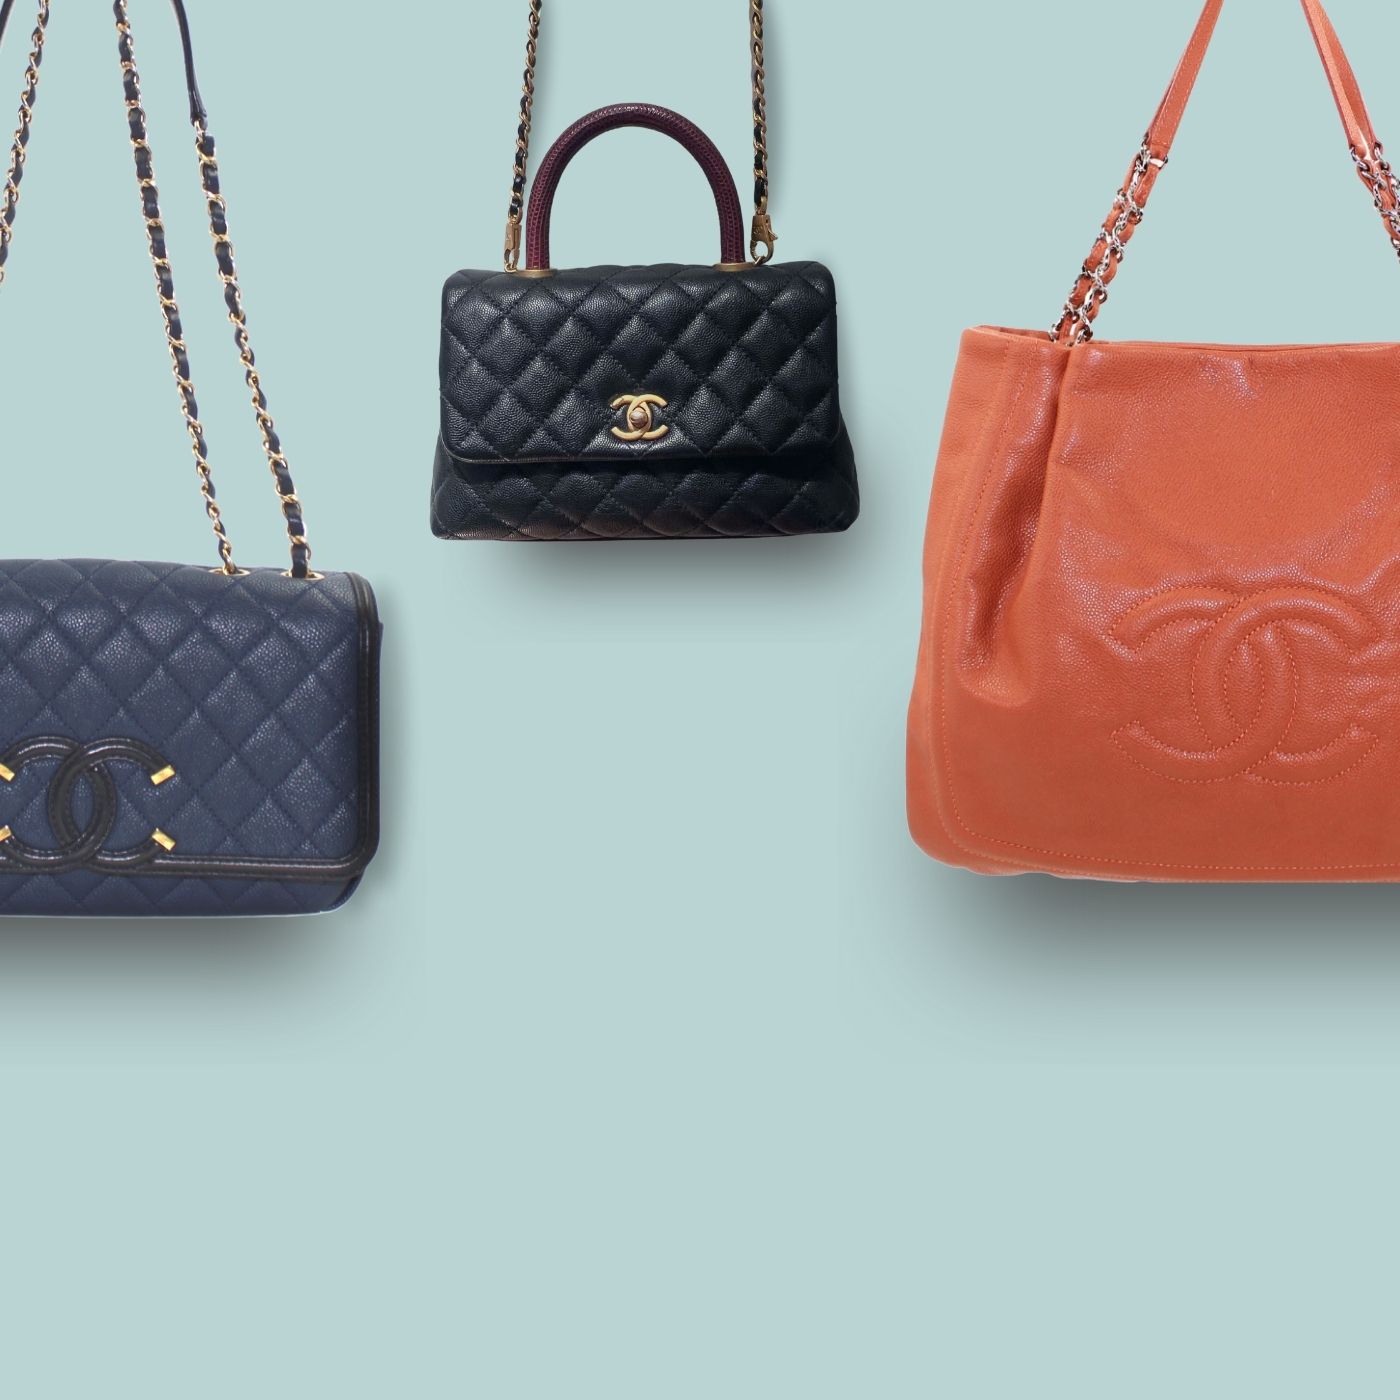 Giani Bernini handbag – Share the Love Consignment